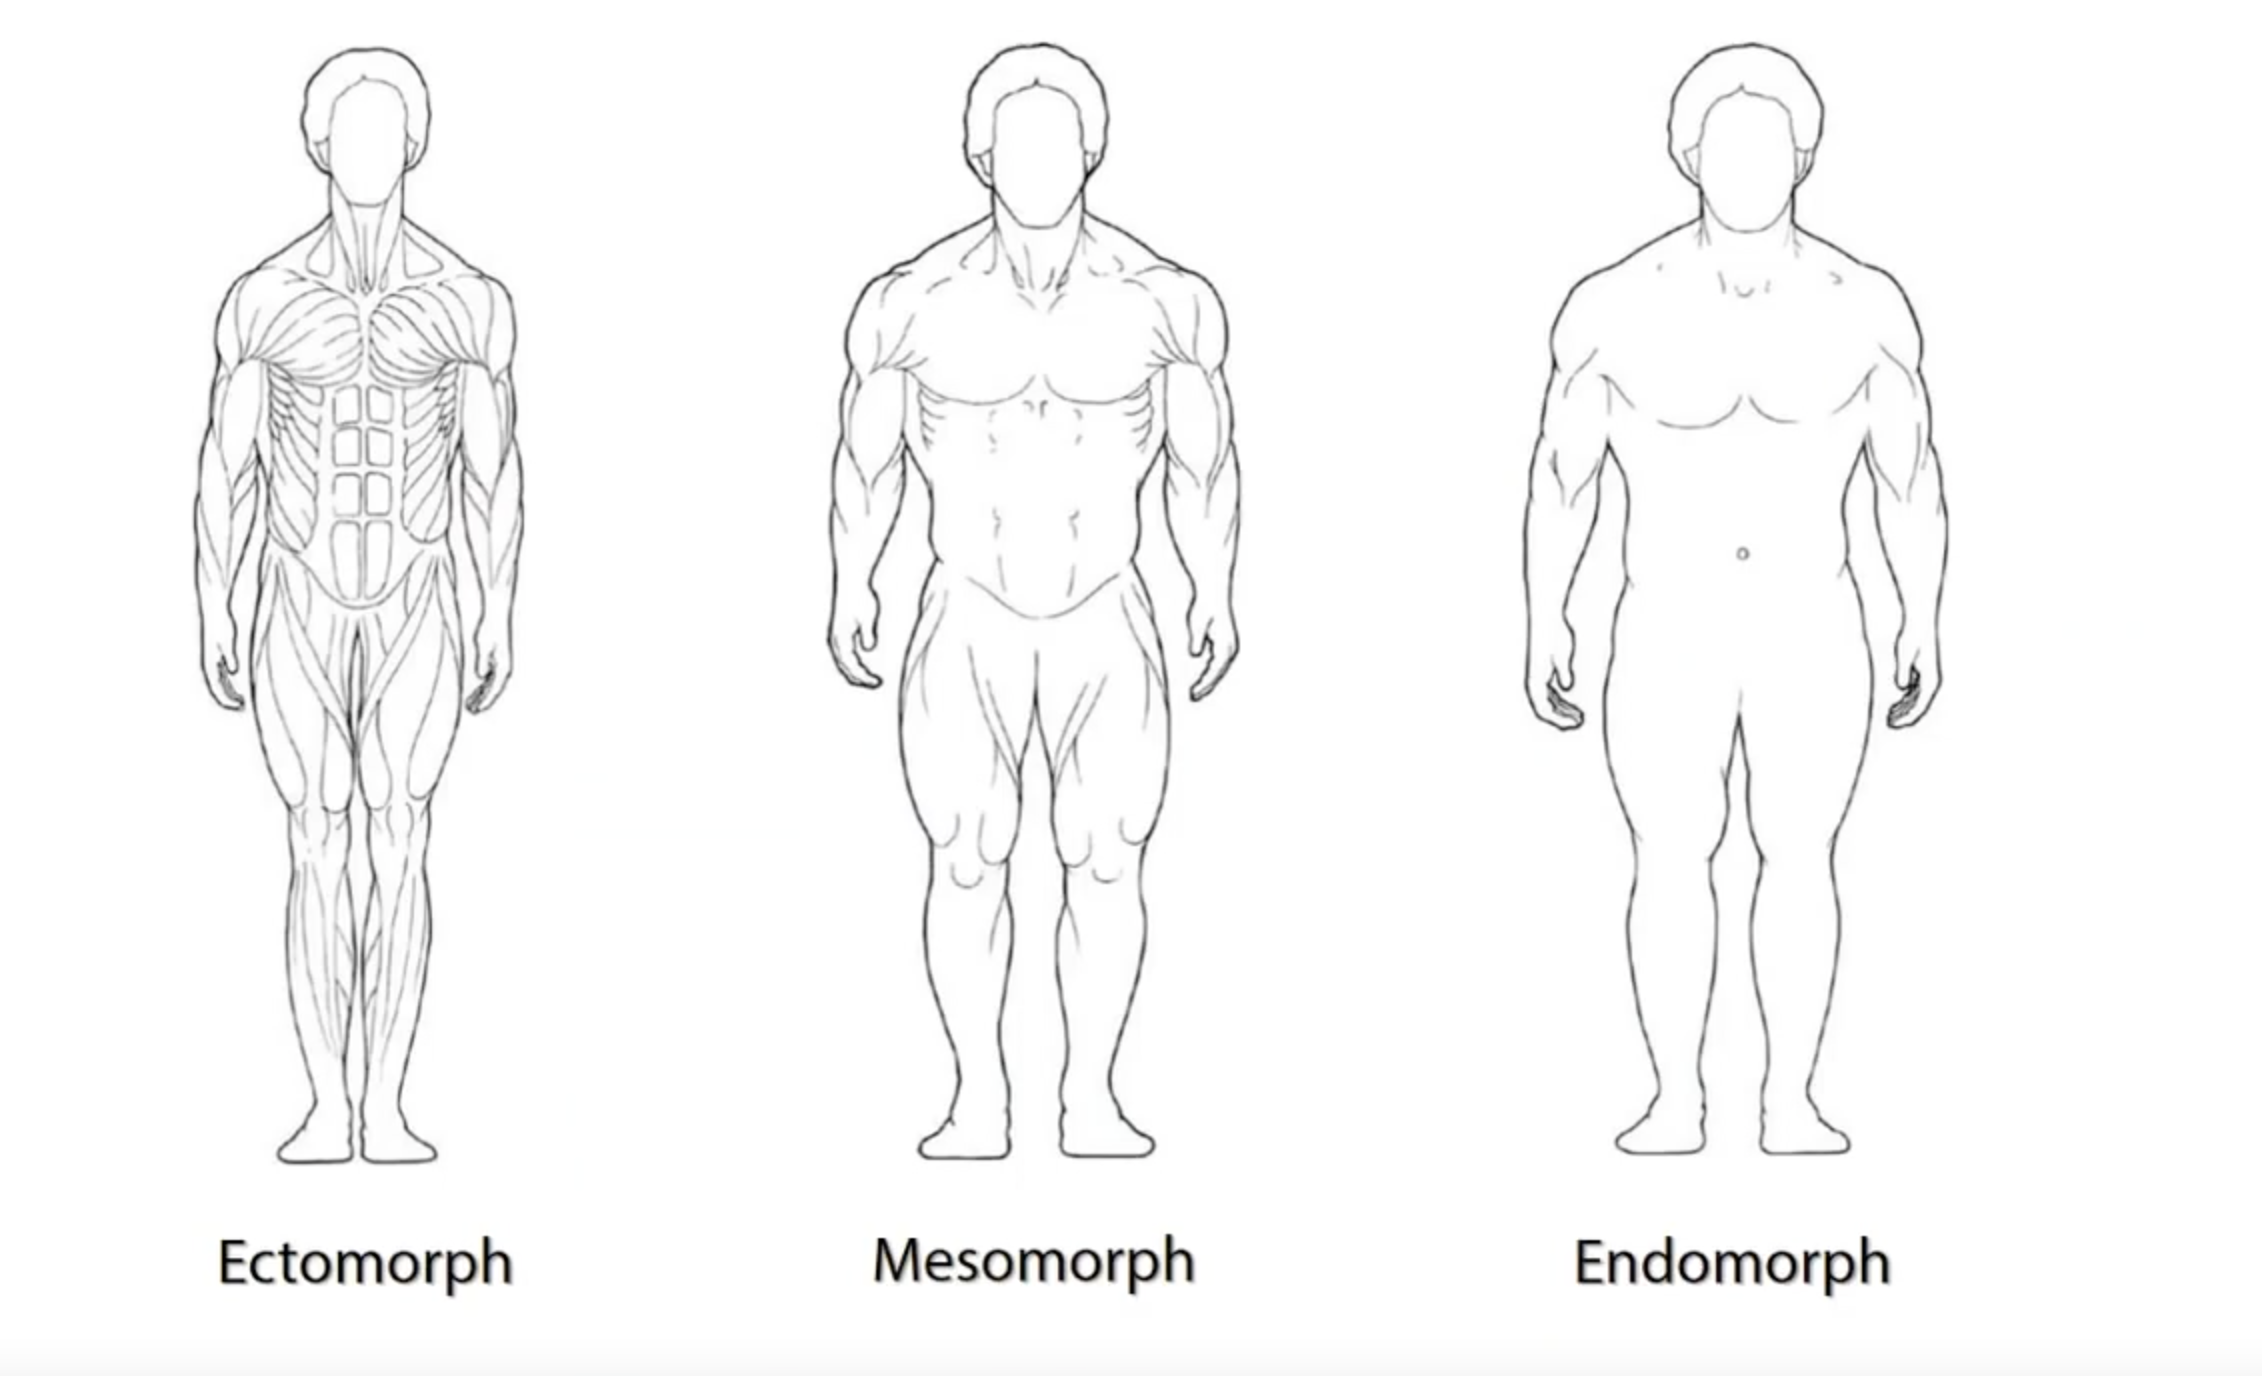 Male Body Types (Ectomorphs, Mesomorphs, and Endomorphs